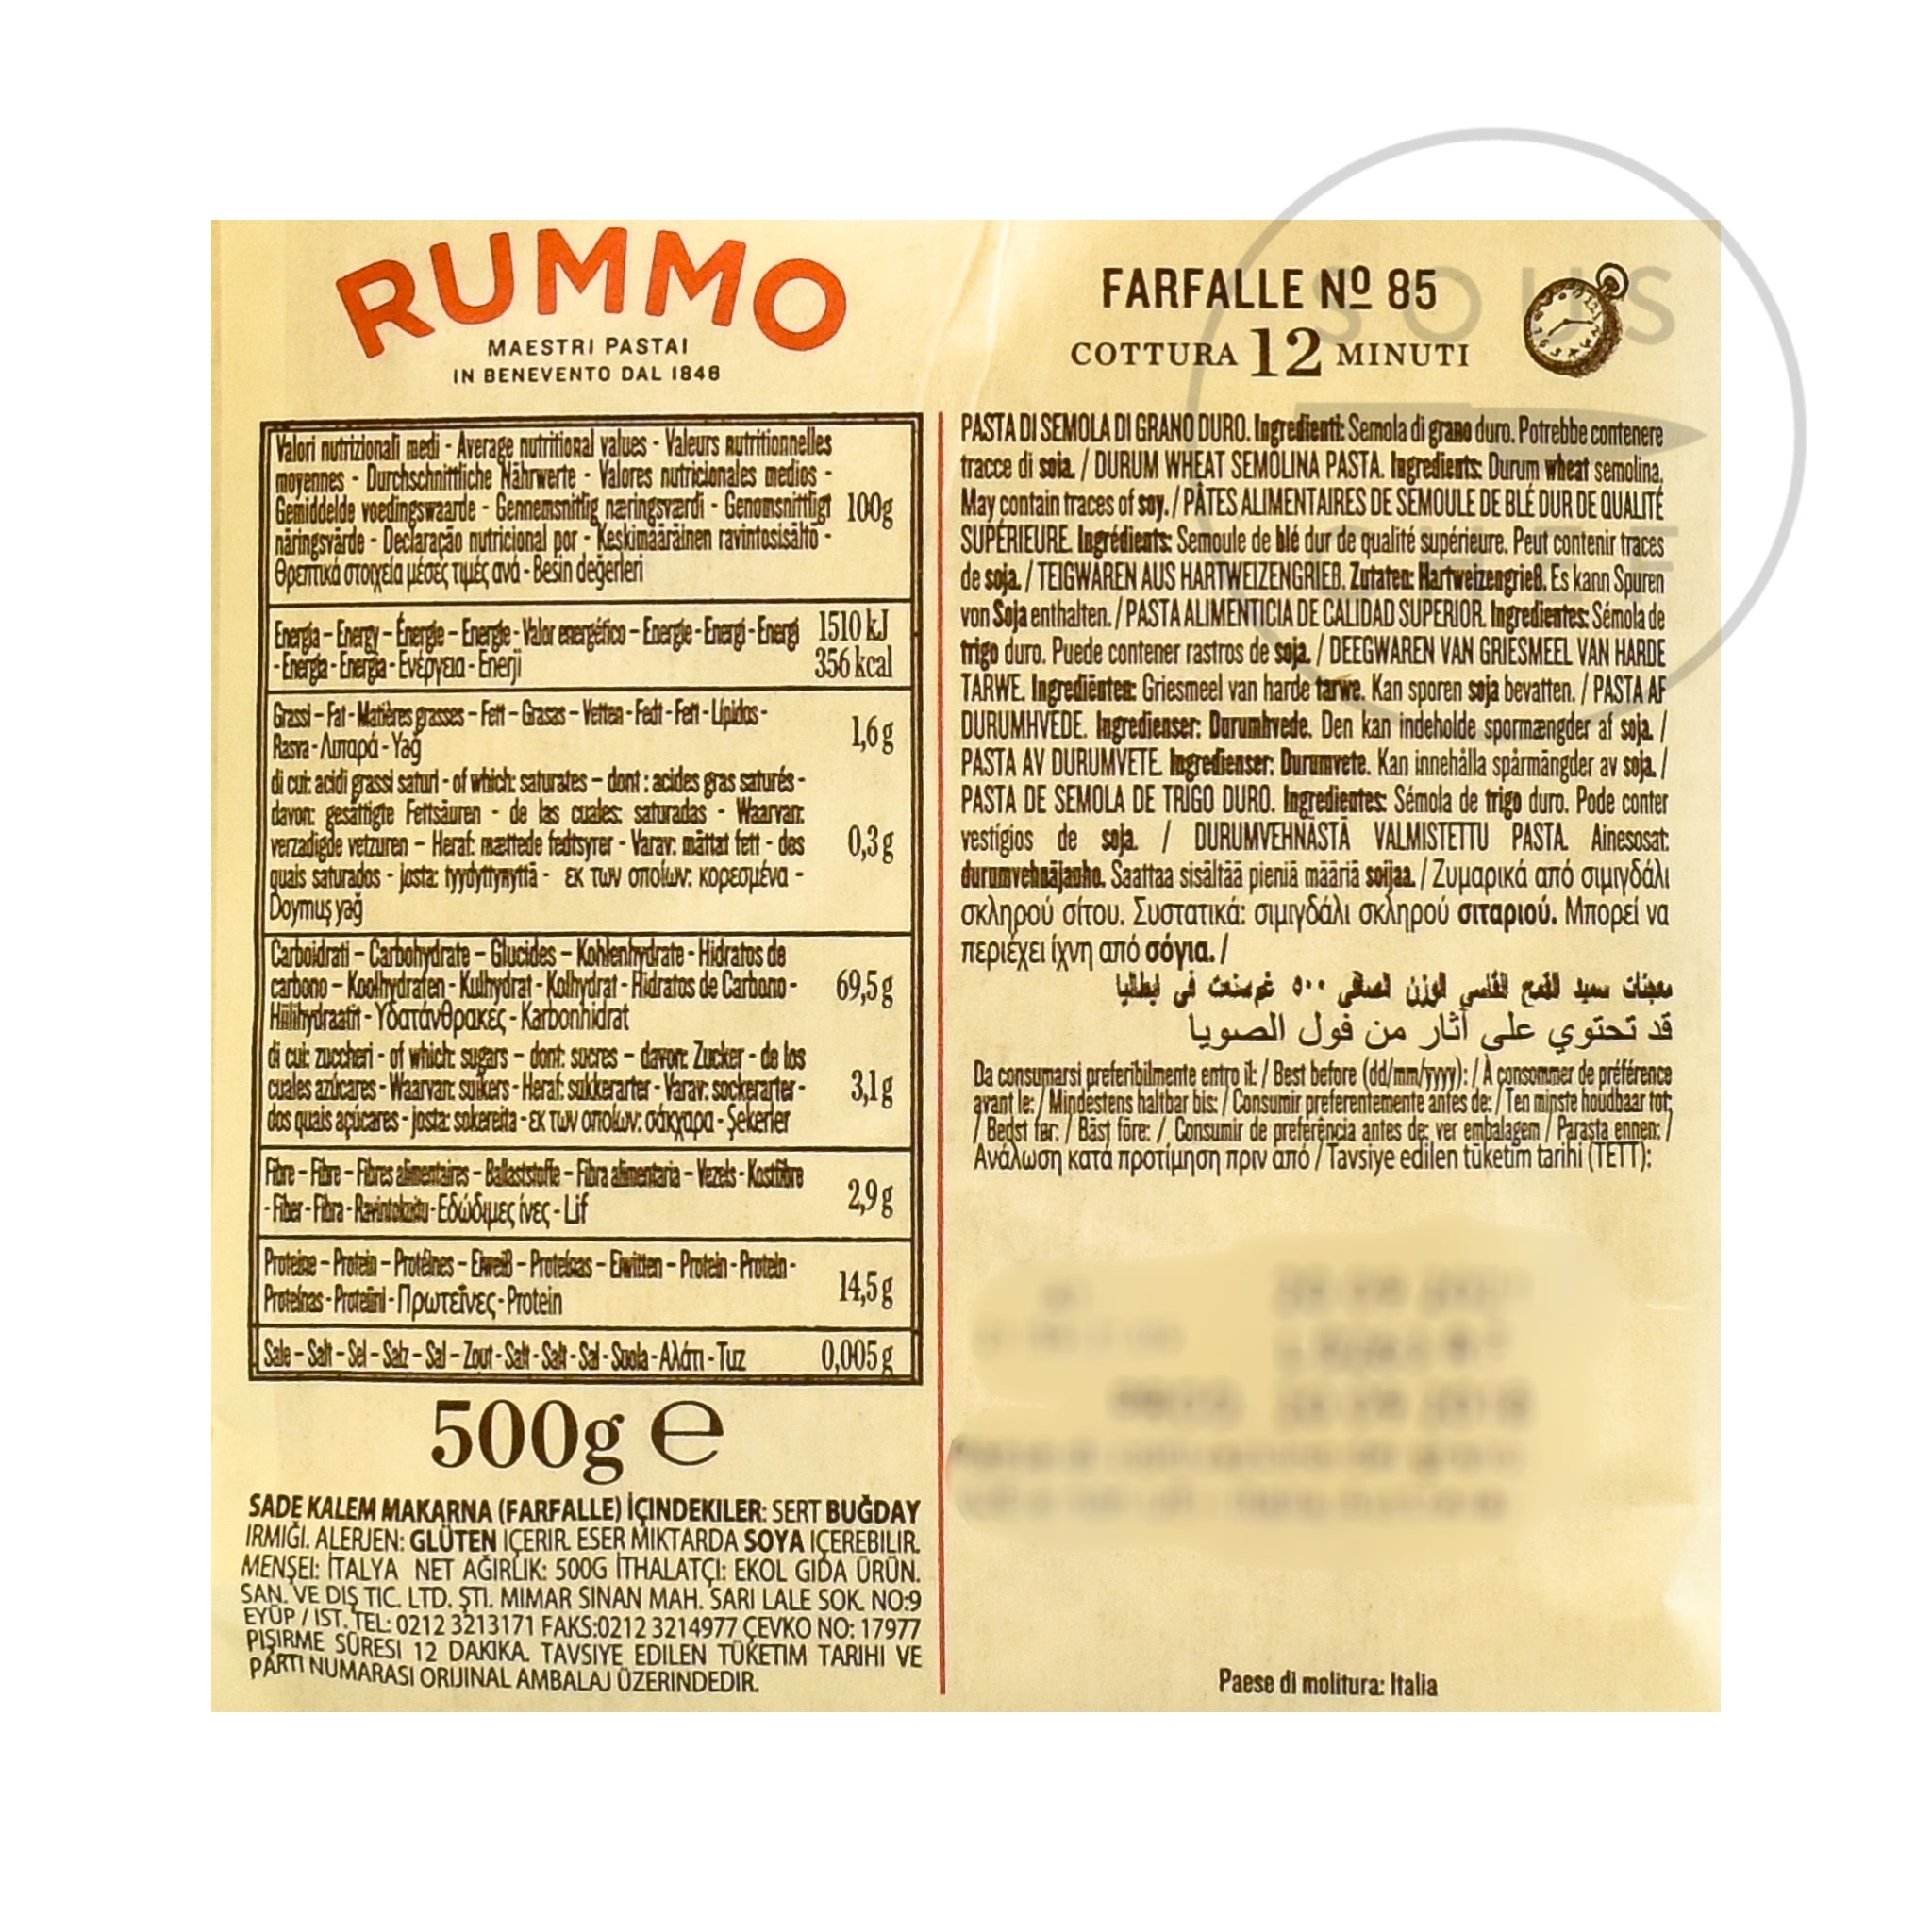 Rummo Farfalle 500g nutritional information ingredients